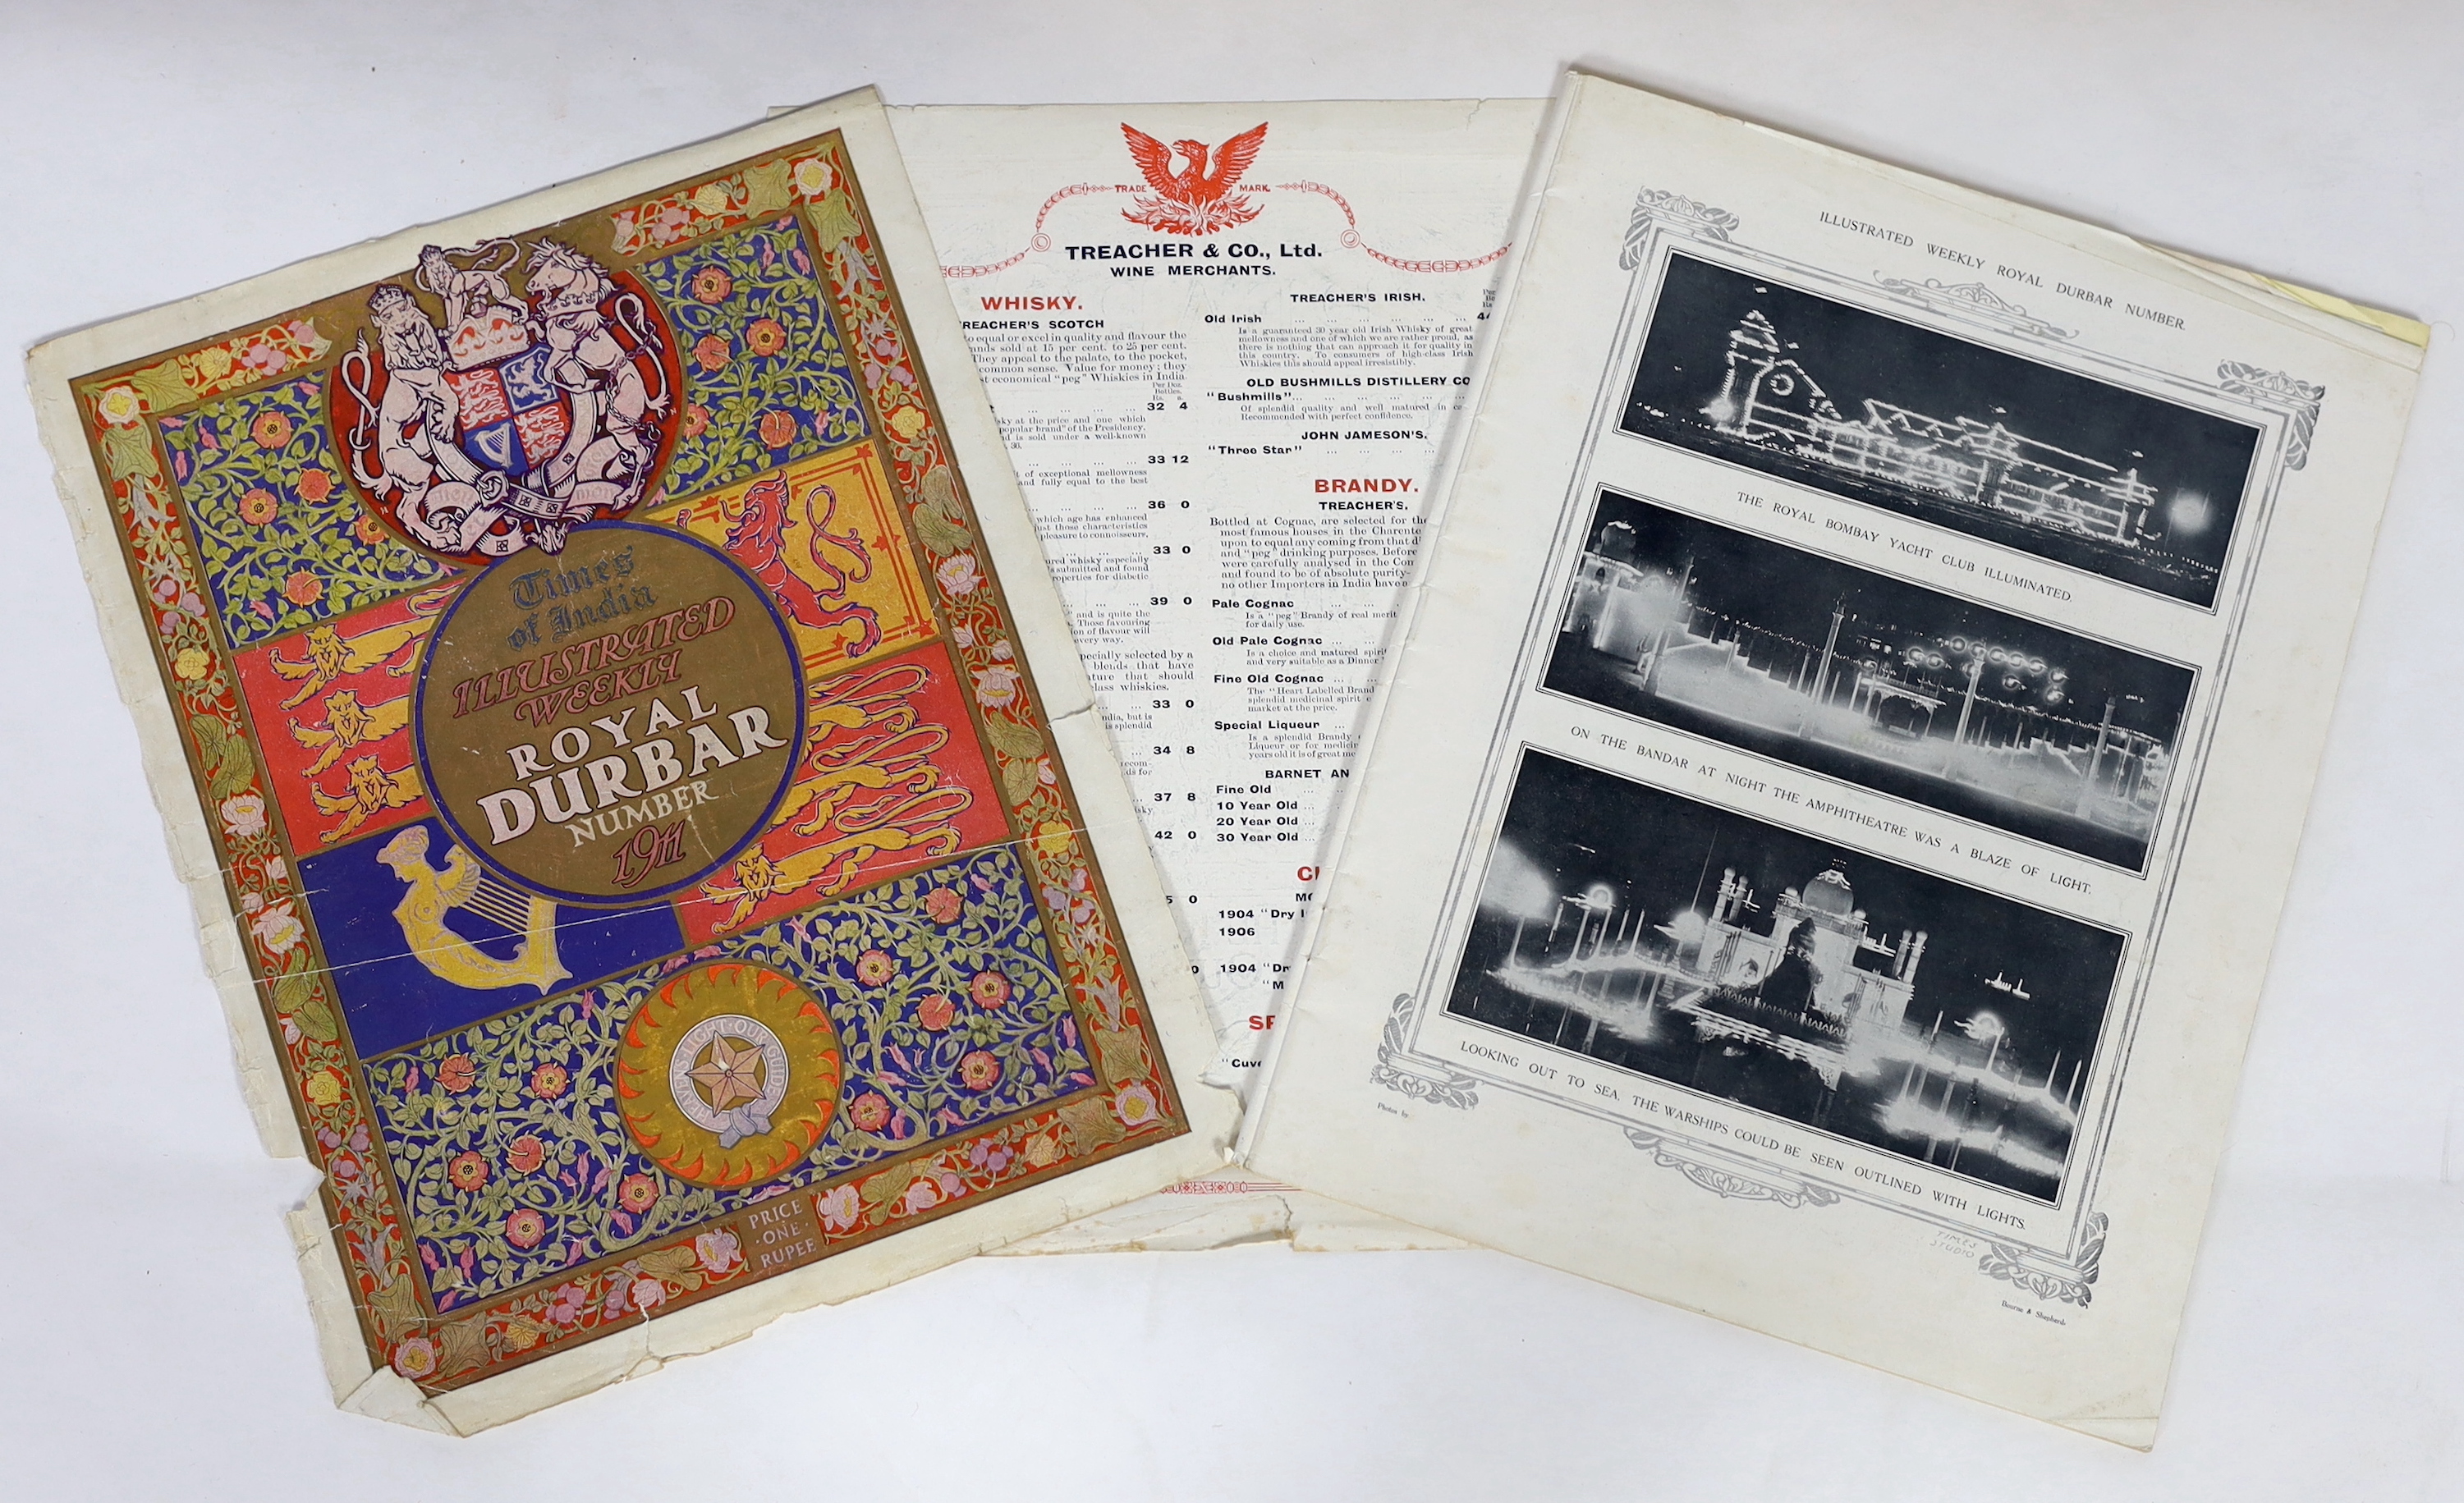 Indian / Royal Interest: VERNON & CO. Souvenir, The Imperial Visit to Delhi. Calcutta: Bombay, Vernon & Co, [1912].